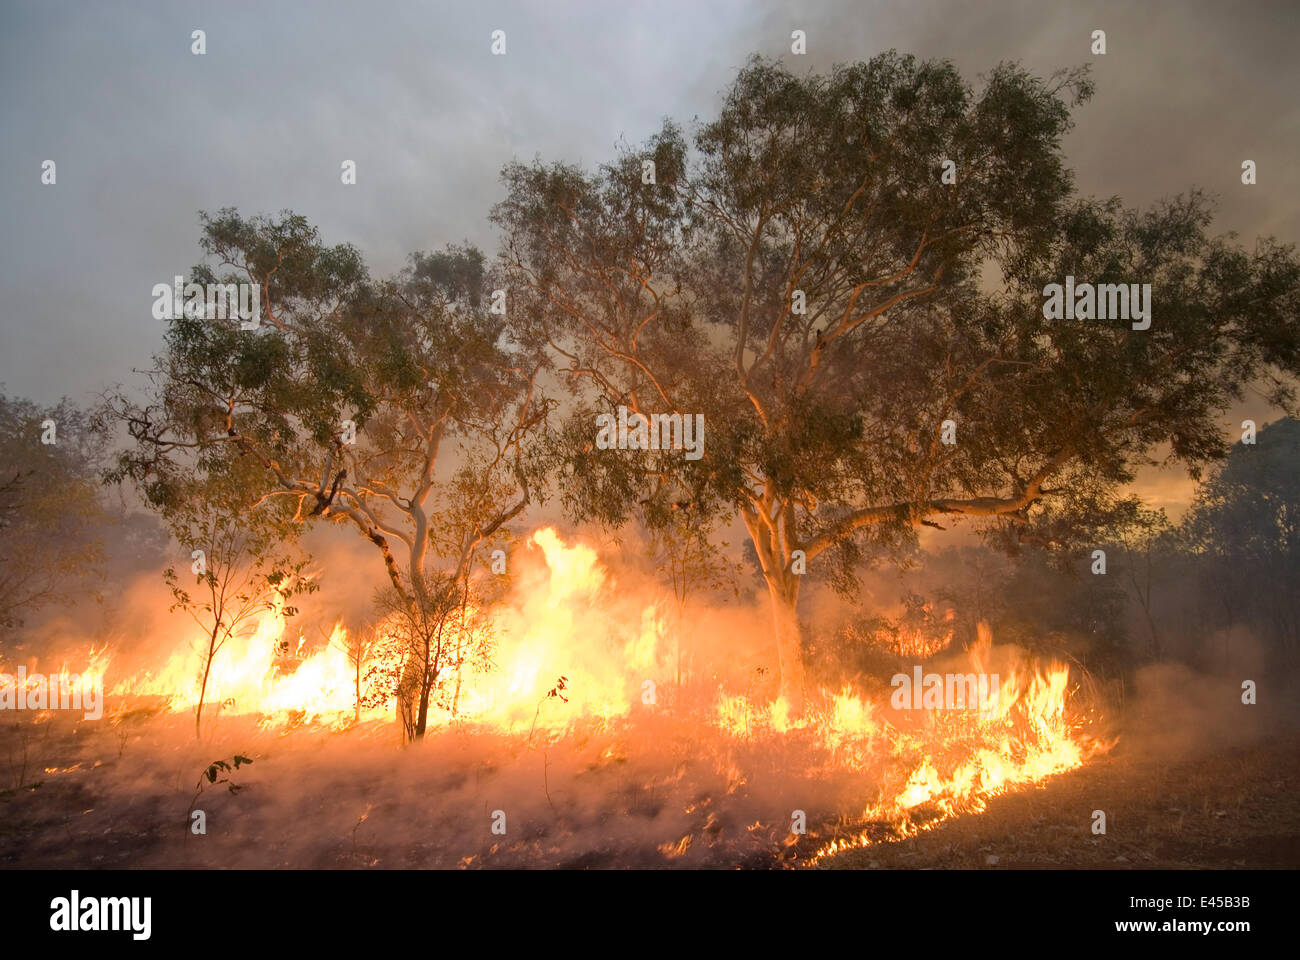 Bushfire in the outback. Derby, Western Australia Stock Photo